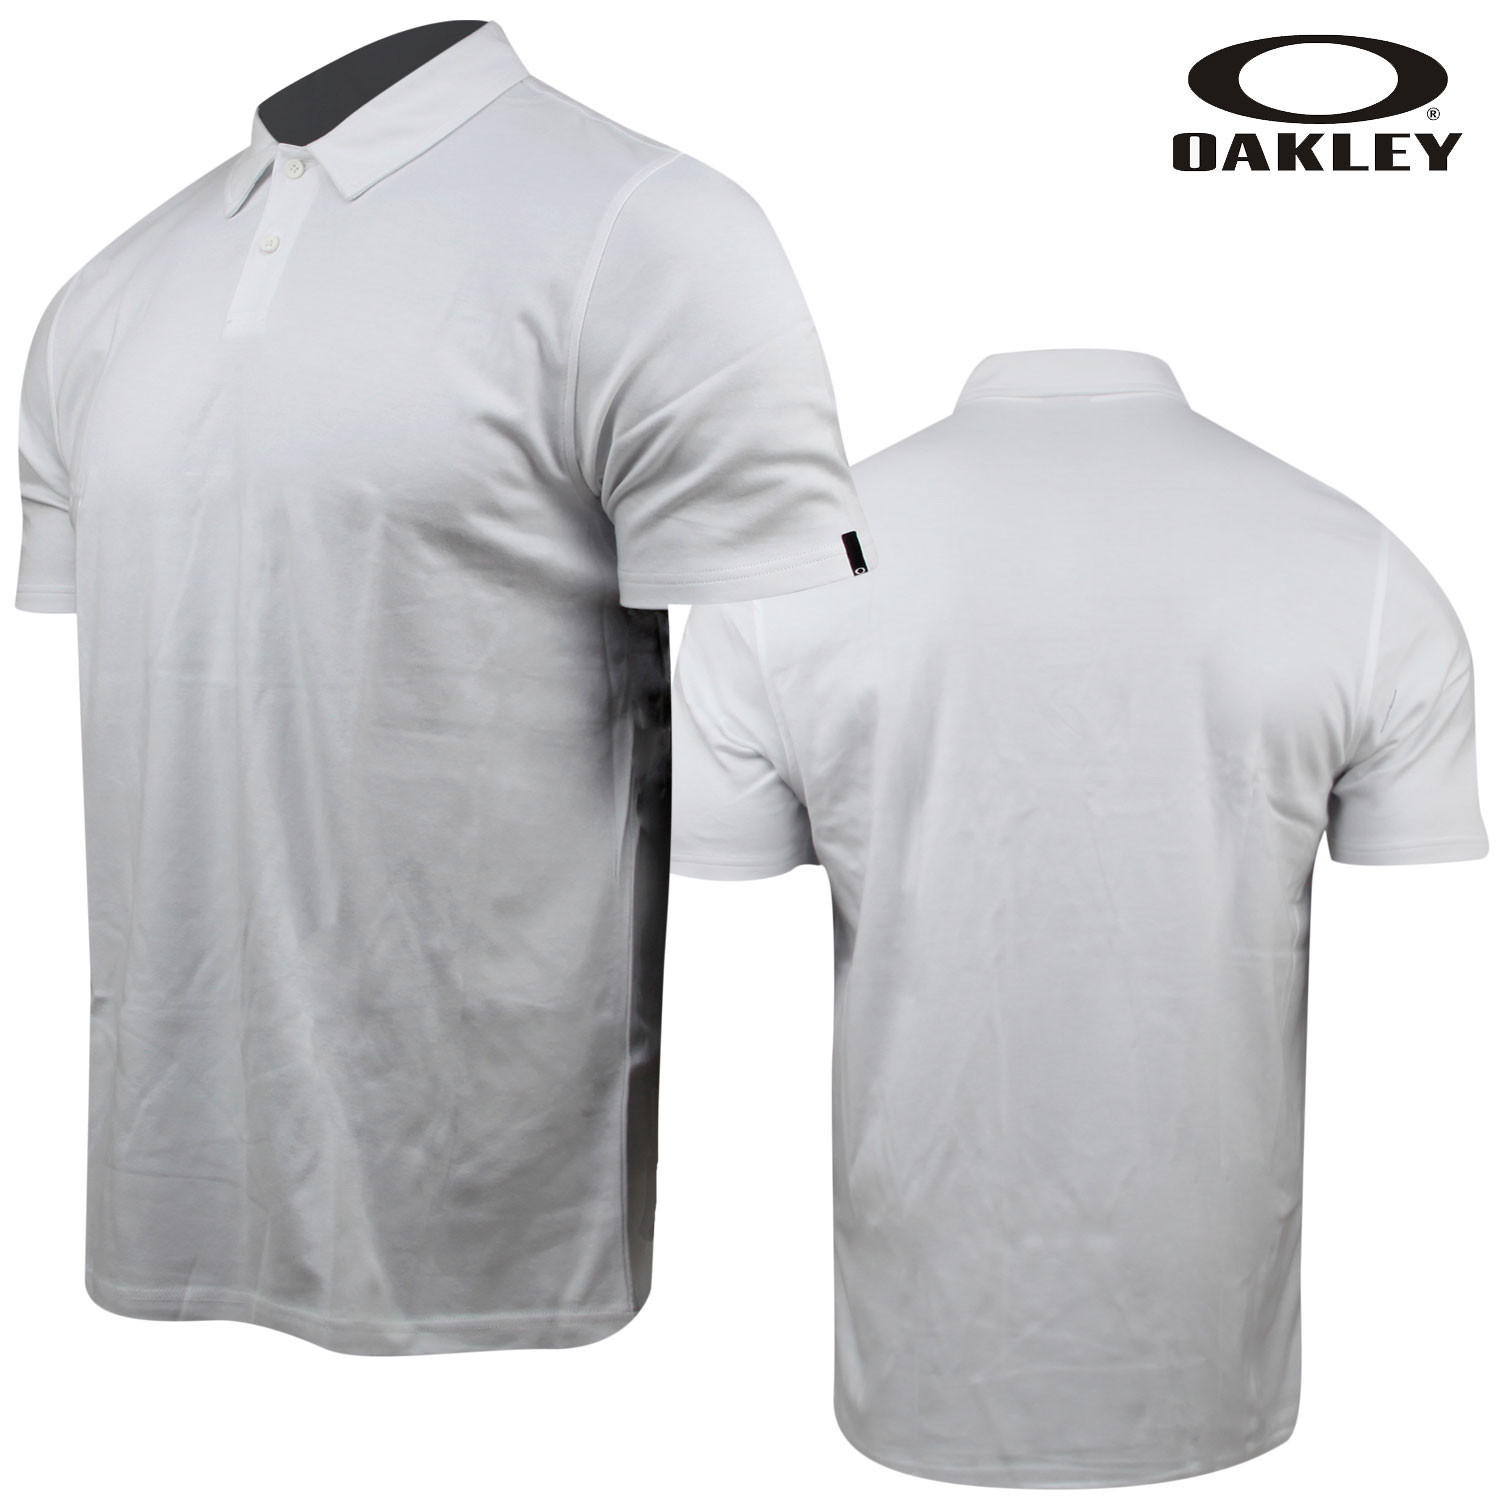 Oakley Crestible Solid Cotton Polo - White (Sm, M, L, XL, 2XL, 3XL)  $18  + Free Ship at FieldSupply